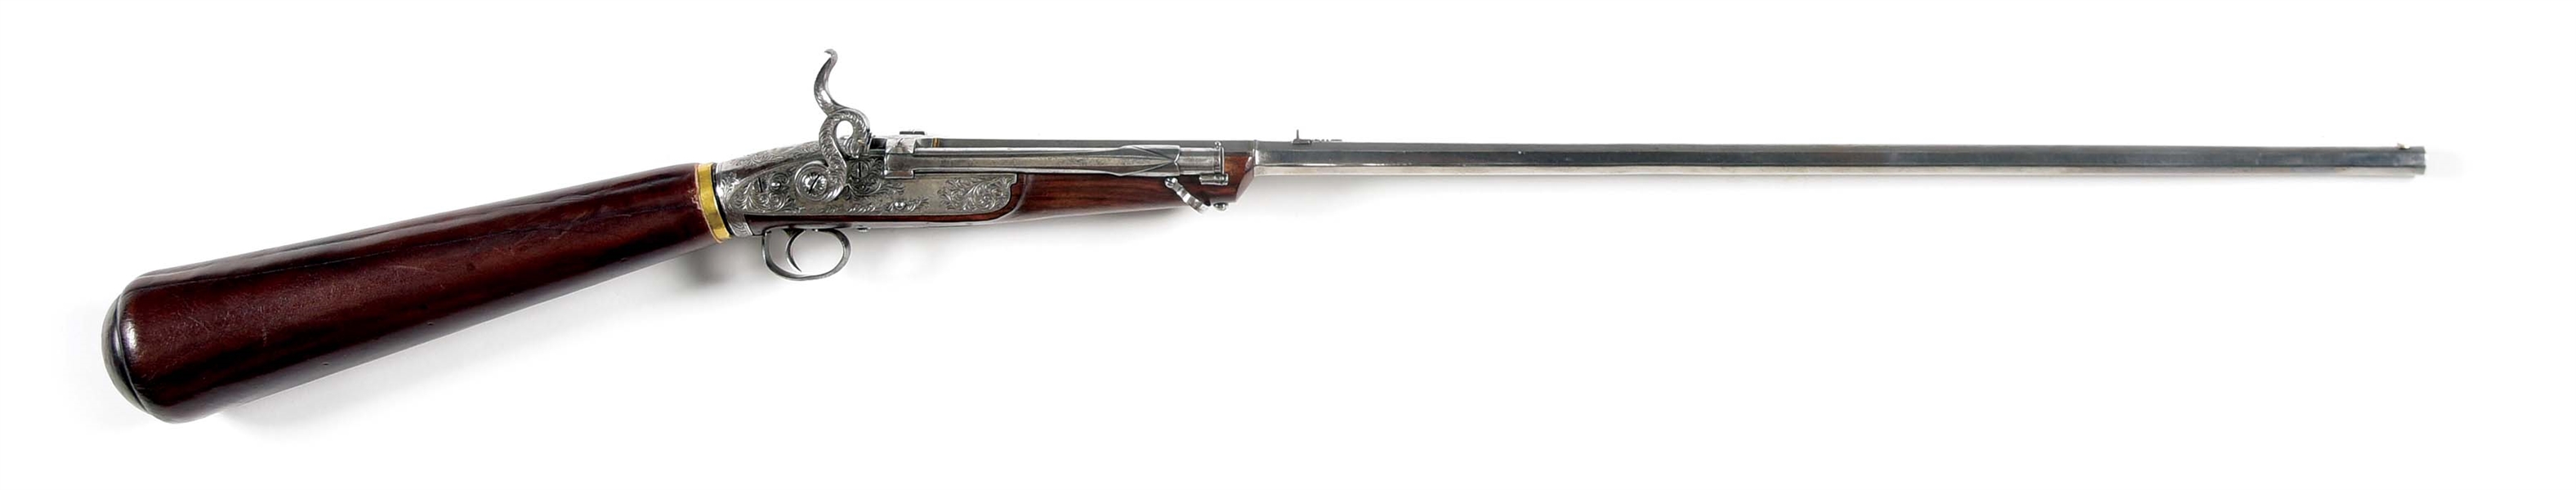 A VERY RARE GIRANDONI AUSTRIAN REPEATING AIR GUN, SIGNED JOS. SCHENBOR IN WIEN, CIRCA 1800. 